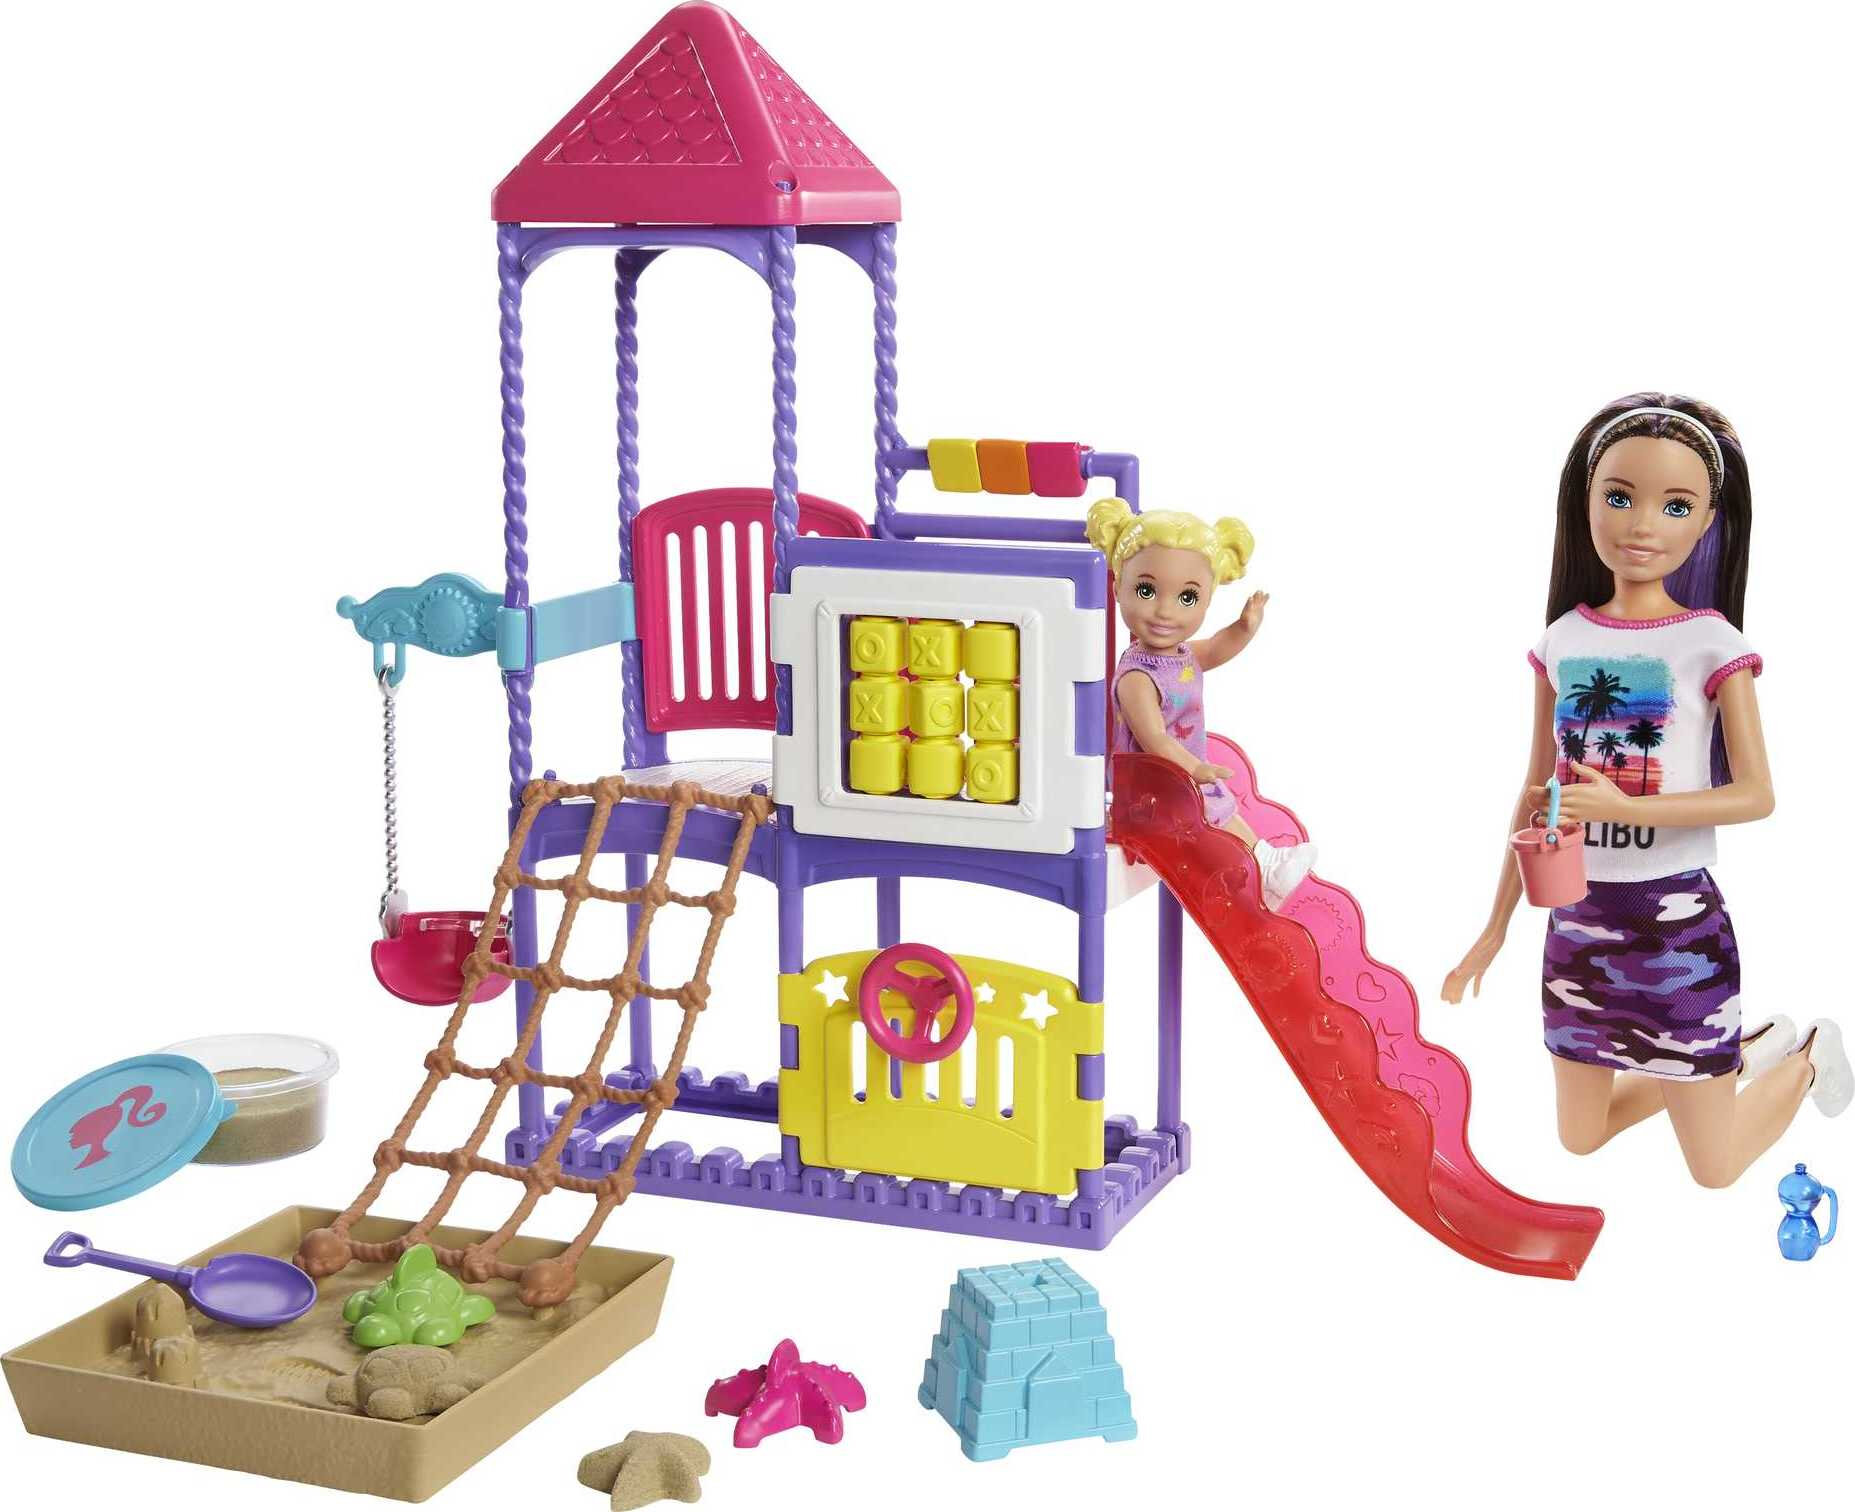 Barbie Skipper Babysitters Inc. Climb ‘n Explore Playground Dolls & Playset - image 1 of 7